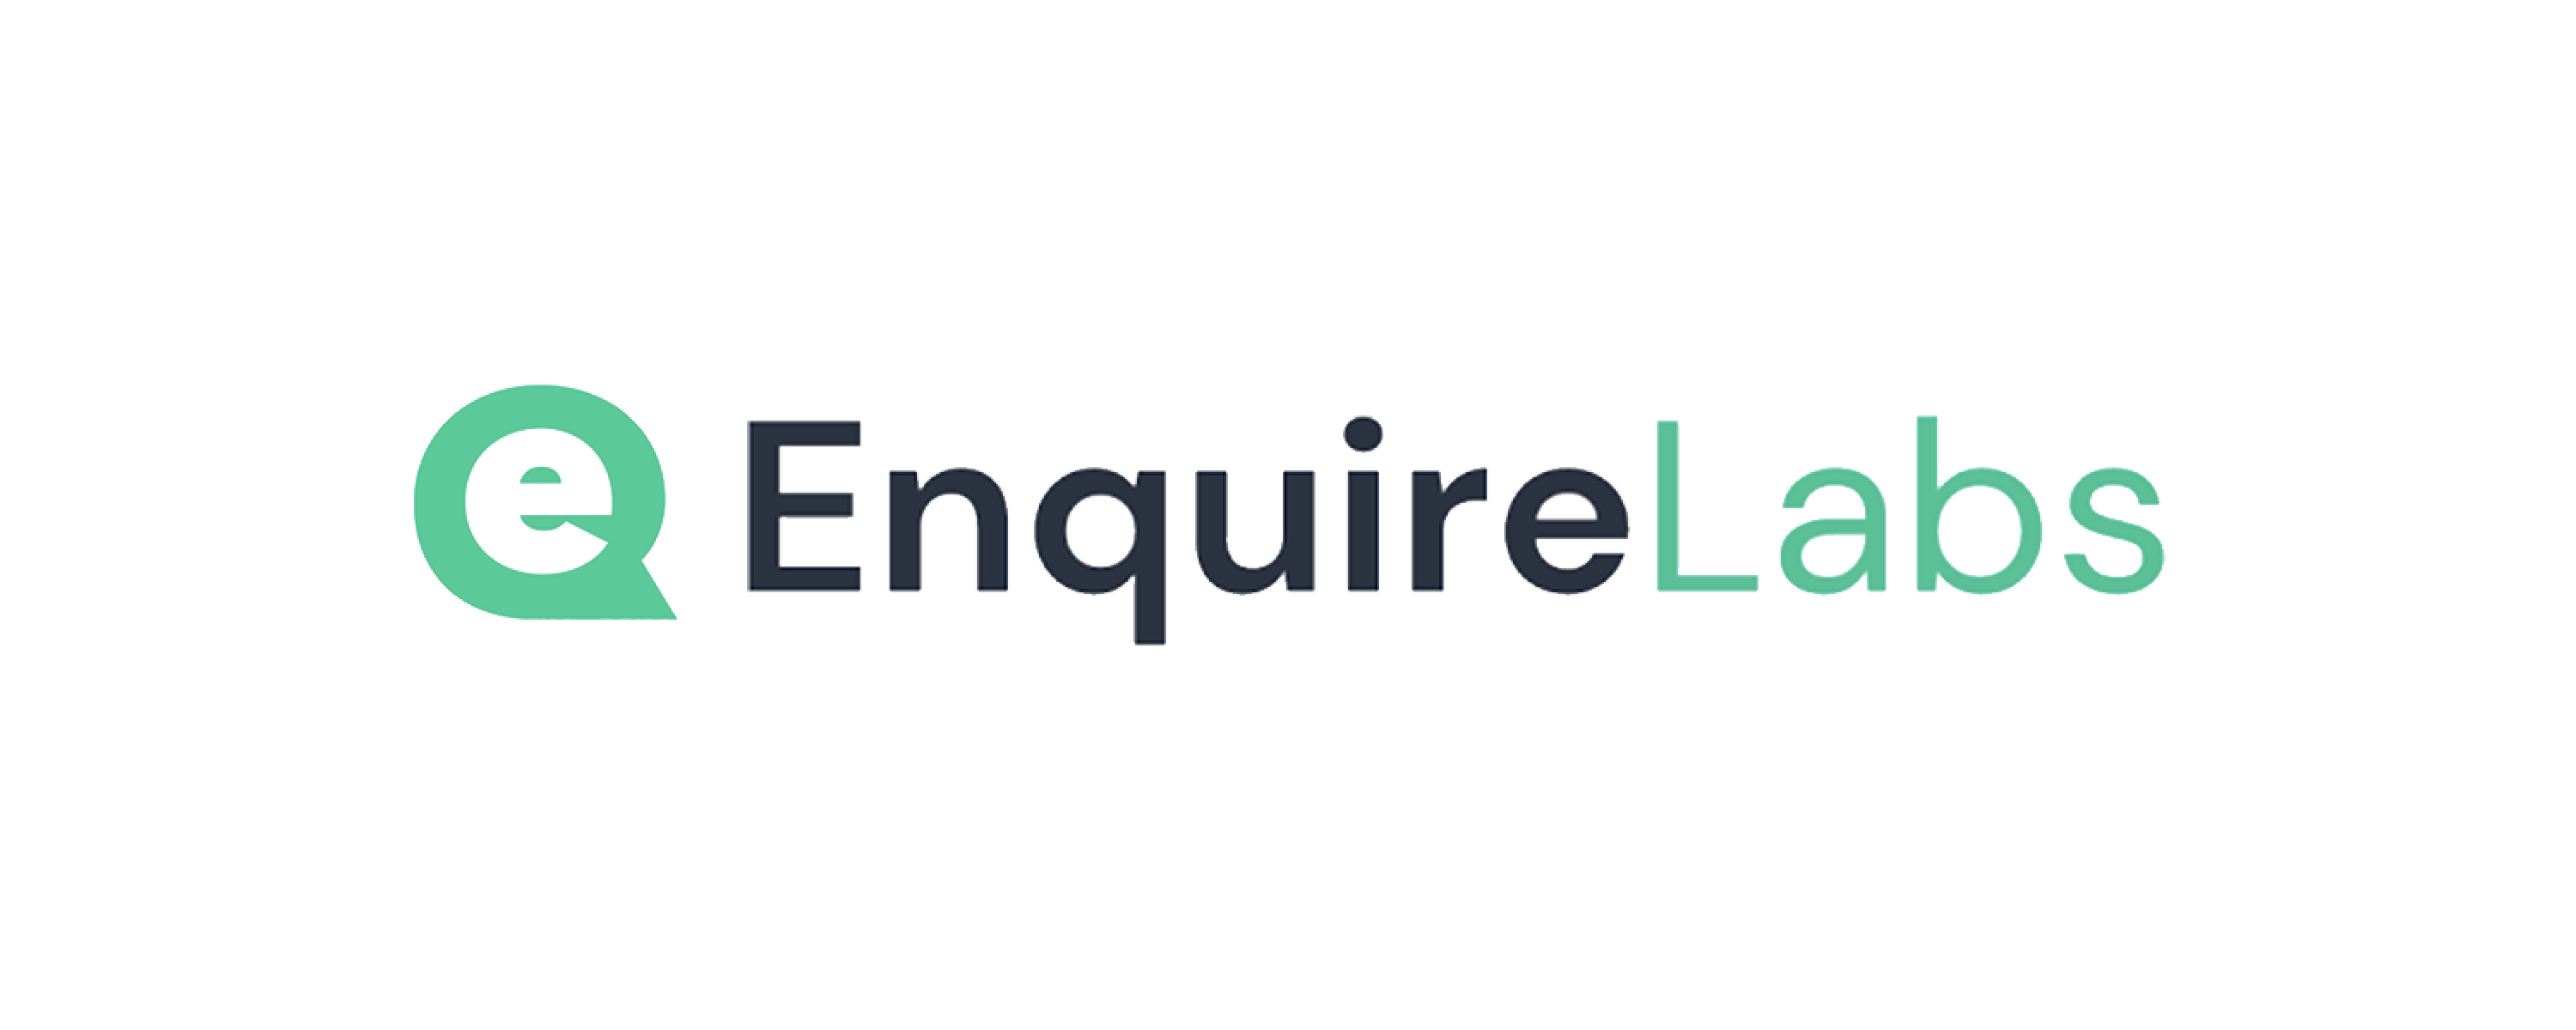 Enquire logo